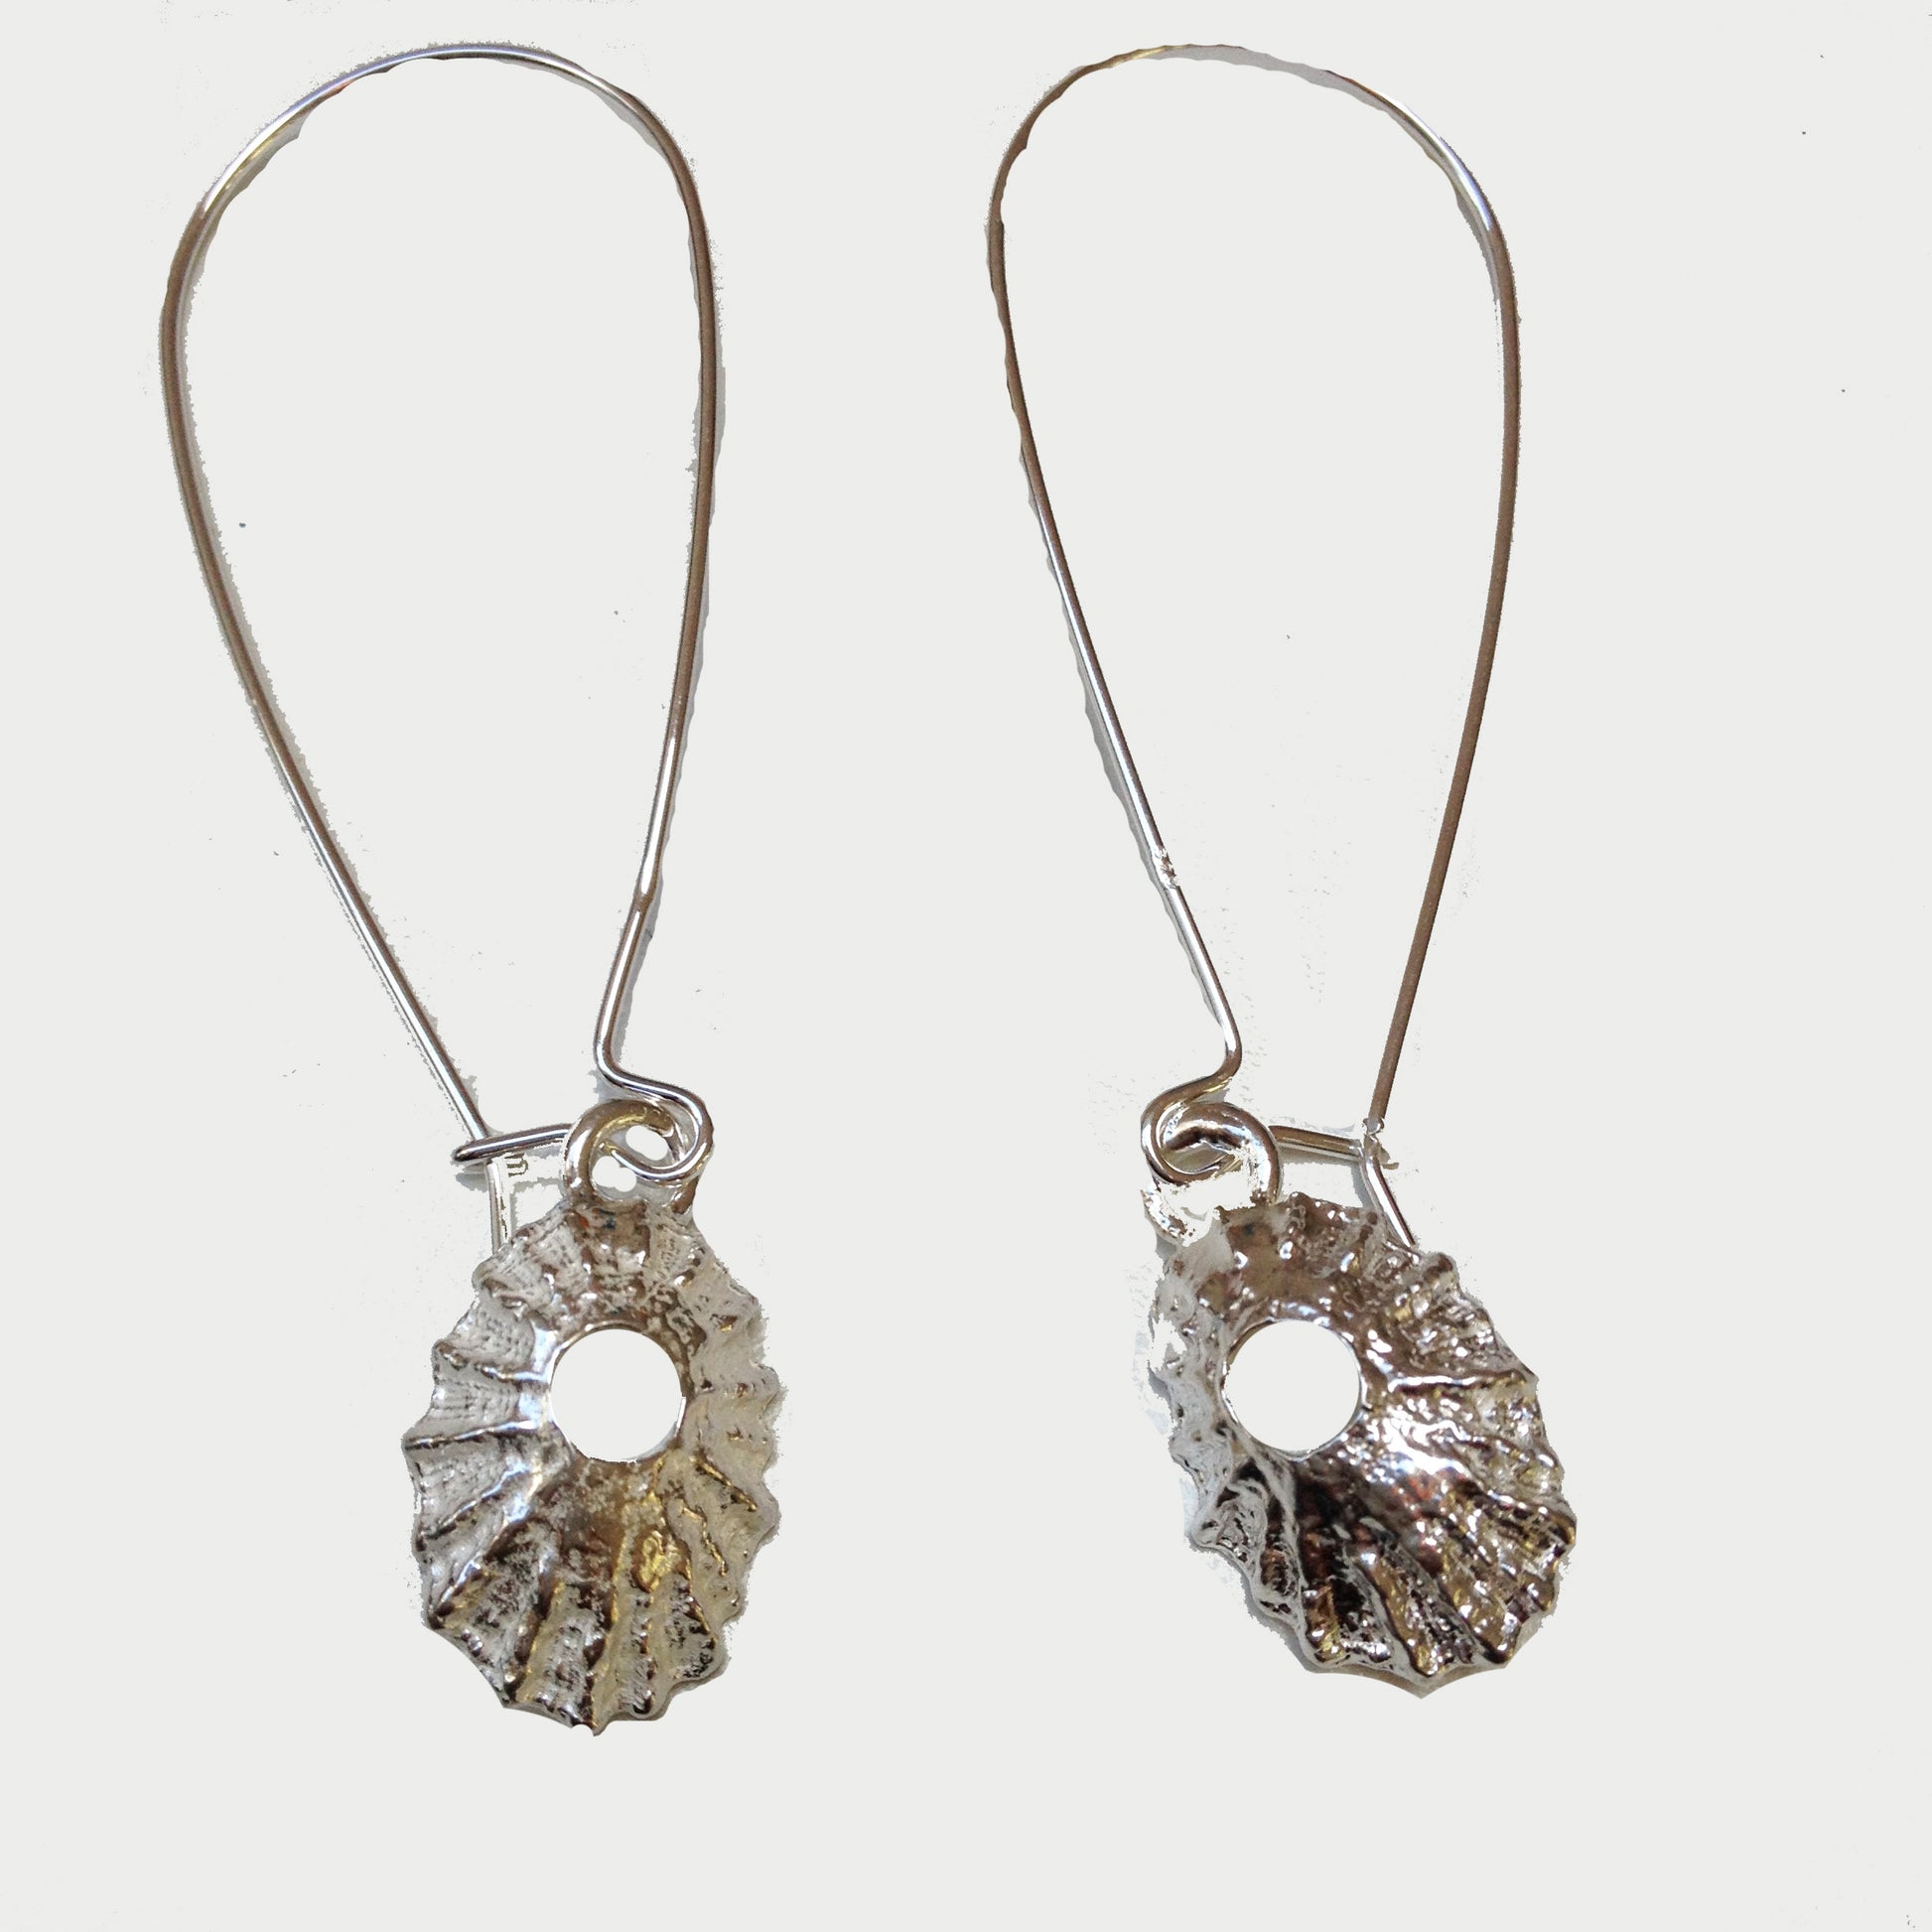 Silver limpet shell earrings by Pa-pa jewellery